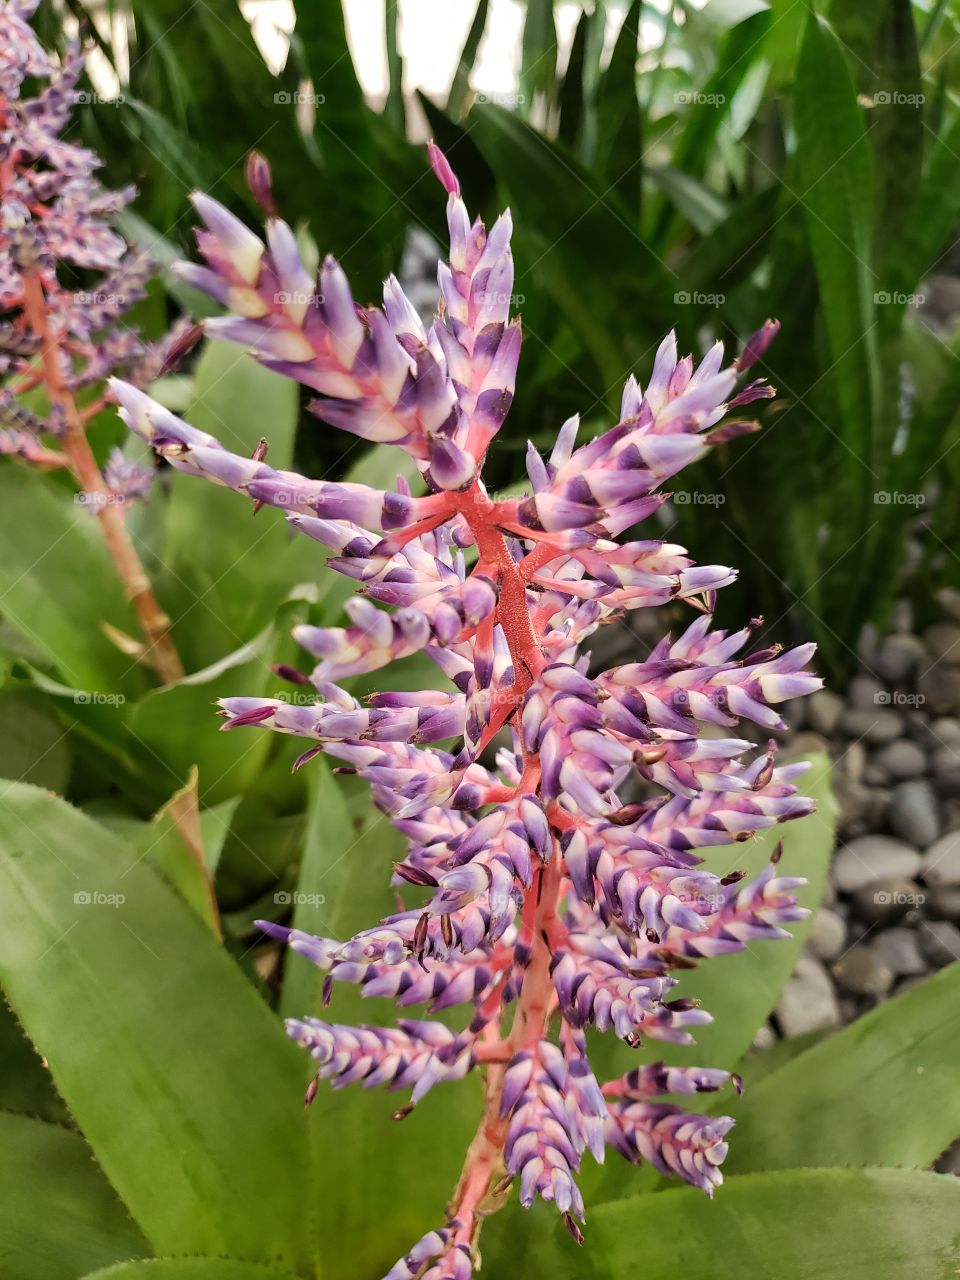 Tropical purple flowers